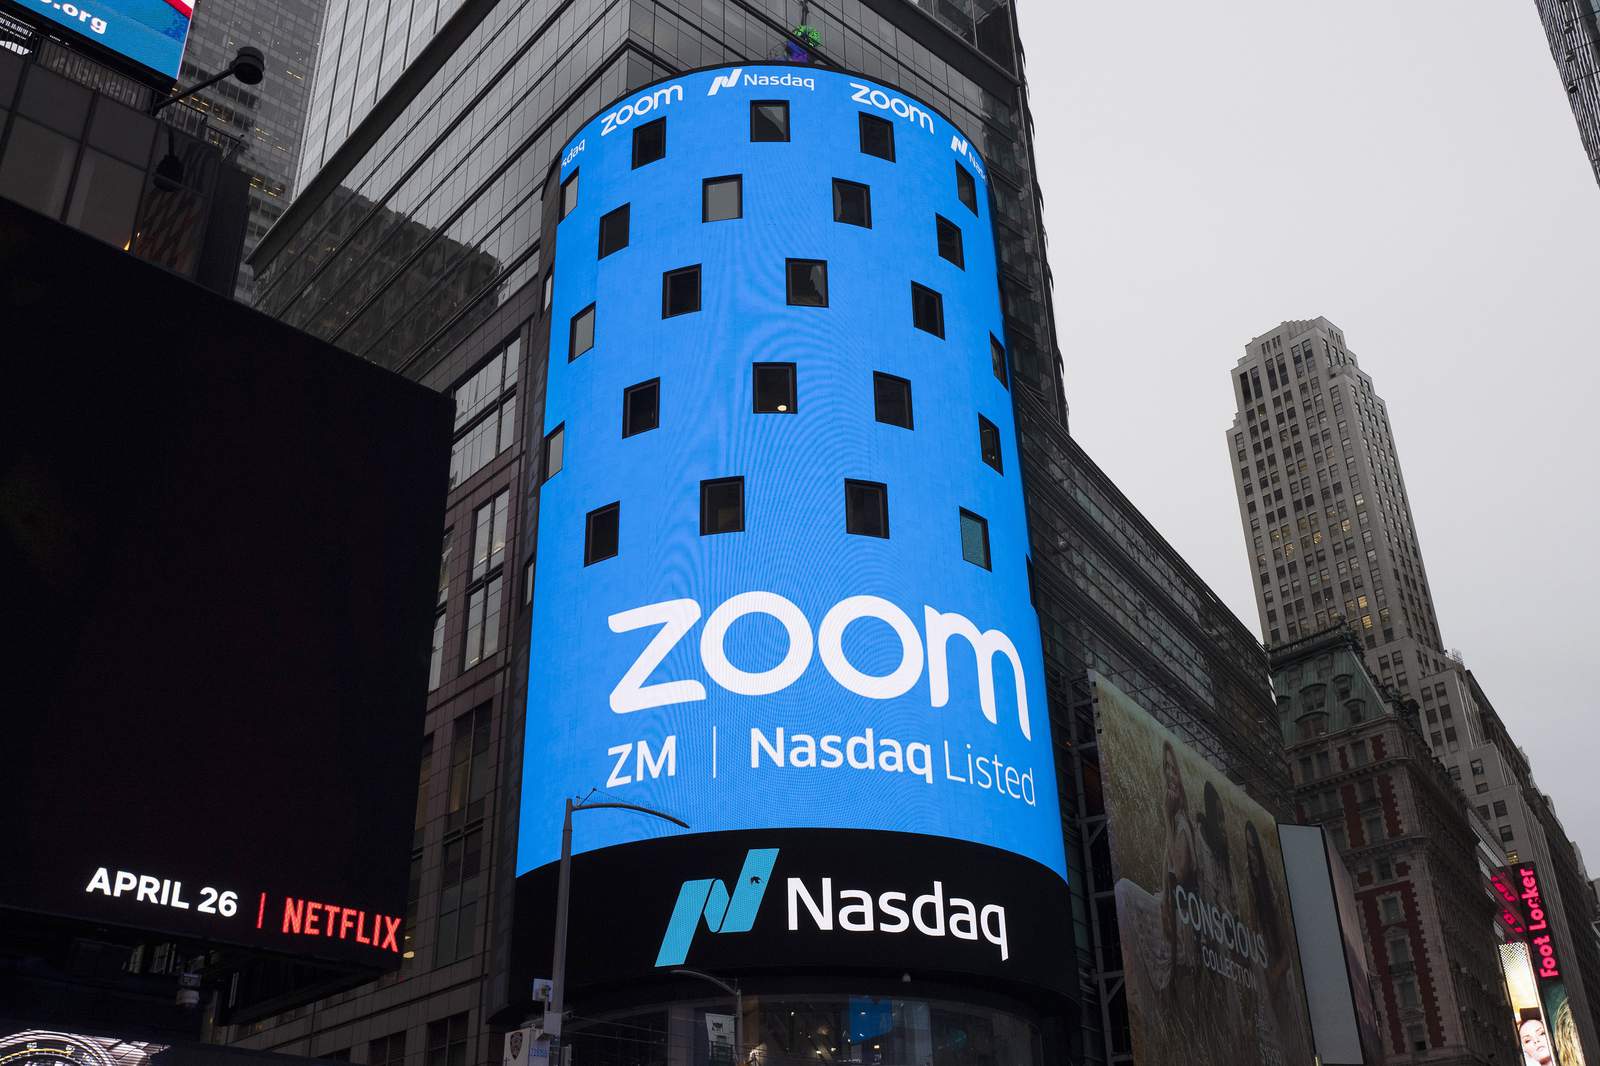 Zoom stock surges, market value tops Boeing, Starbucks